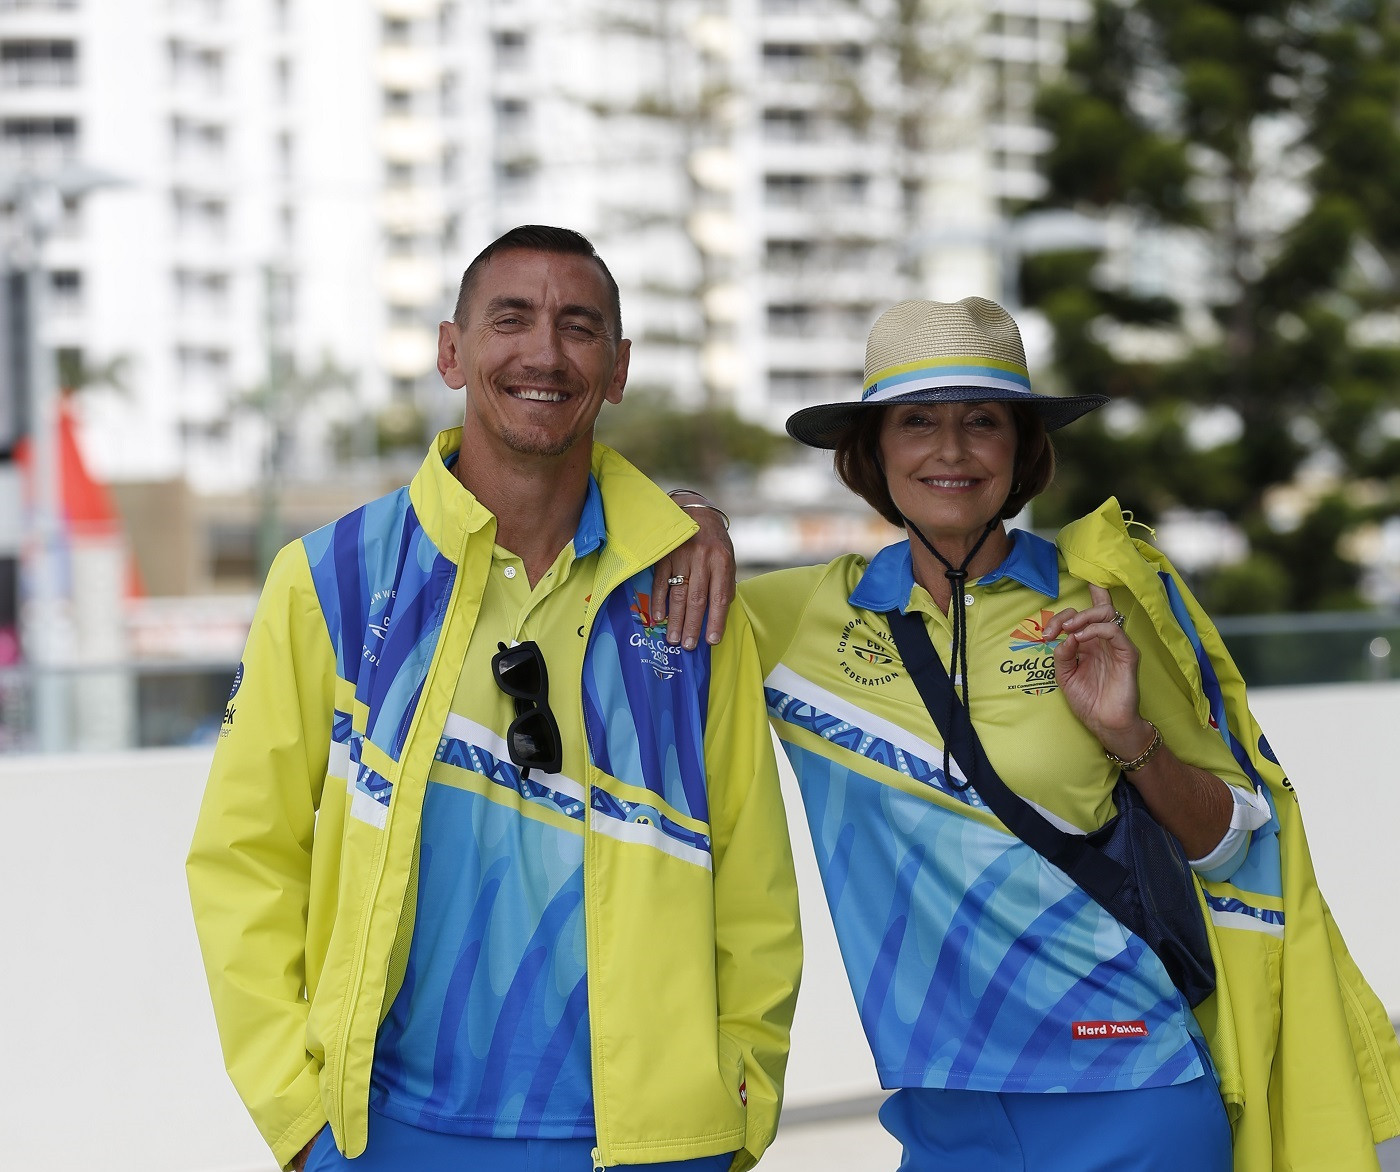 Gold Coast 2018 volunteers presented with uniforms